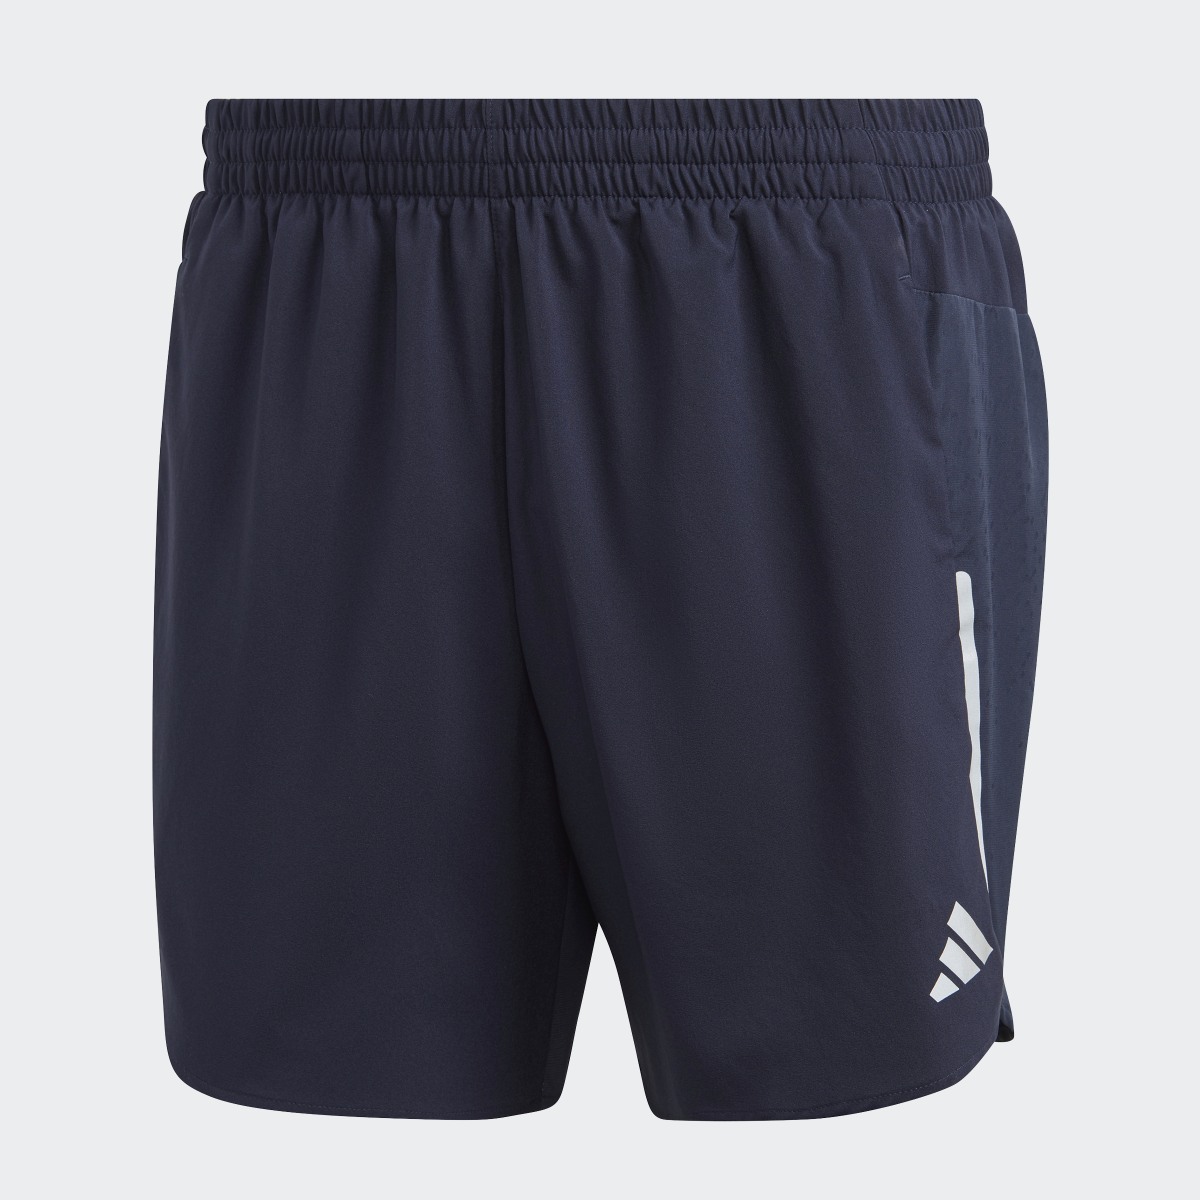 Adidas Designed for Running Engineered Shorts. 4